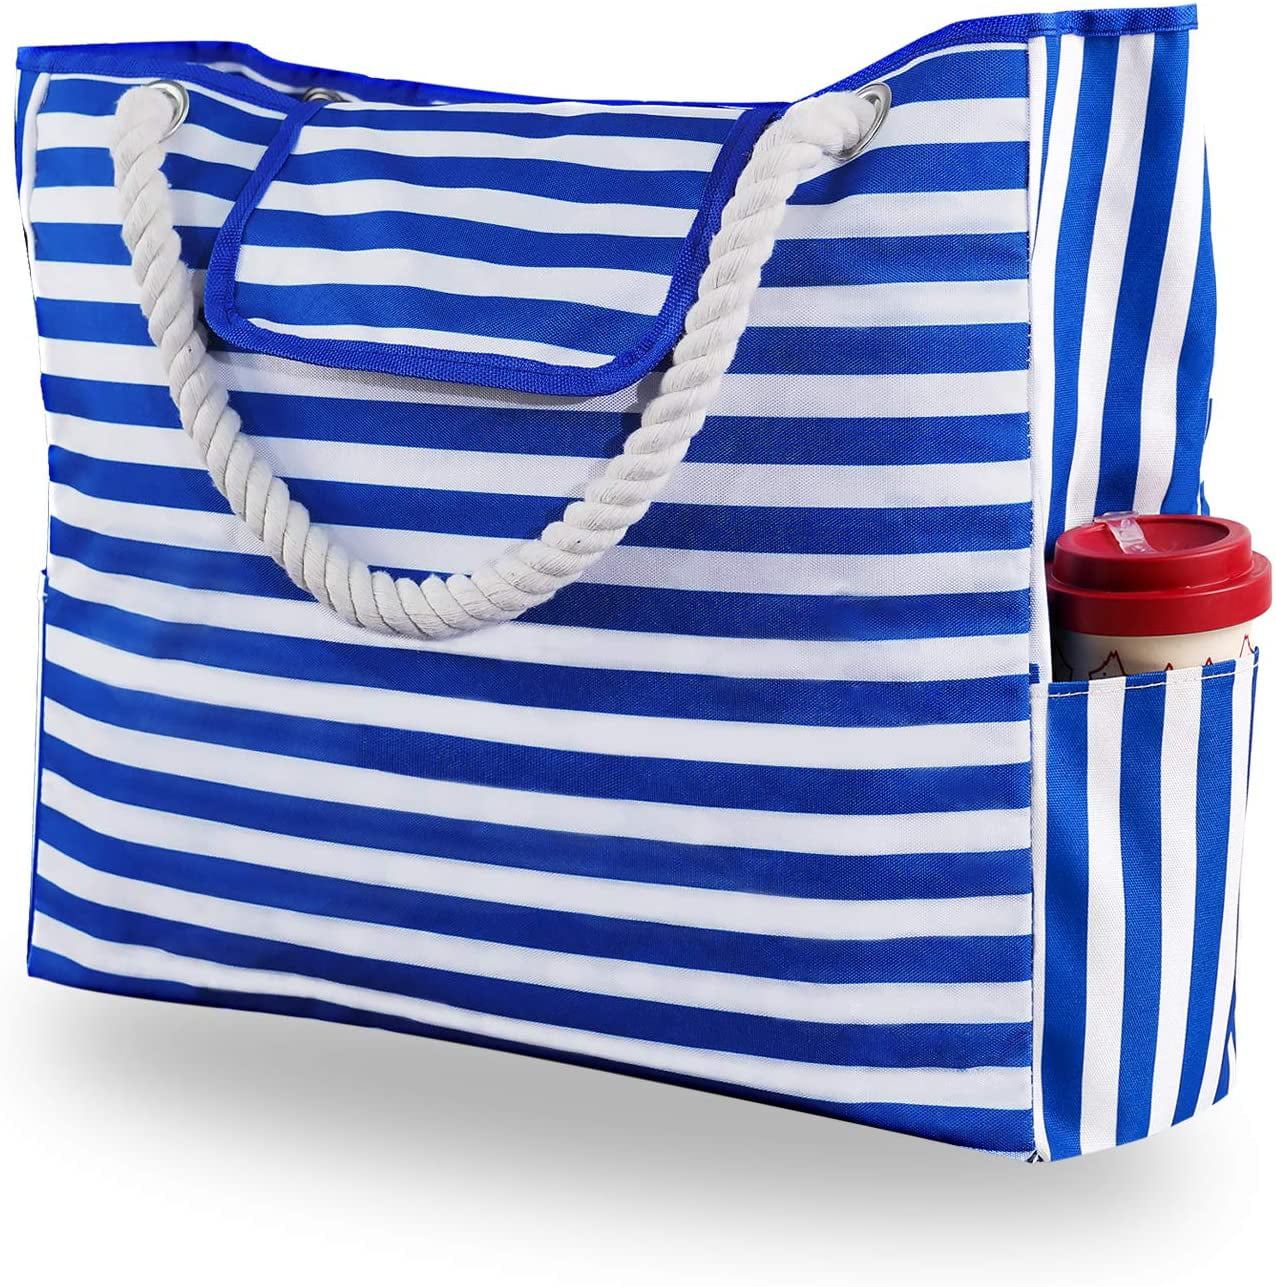 WJKB Large Beach Tote Bag Women Waterproof Canvas Tote Bag for Pool ...